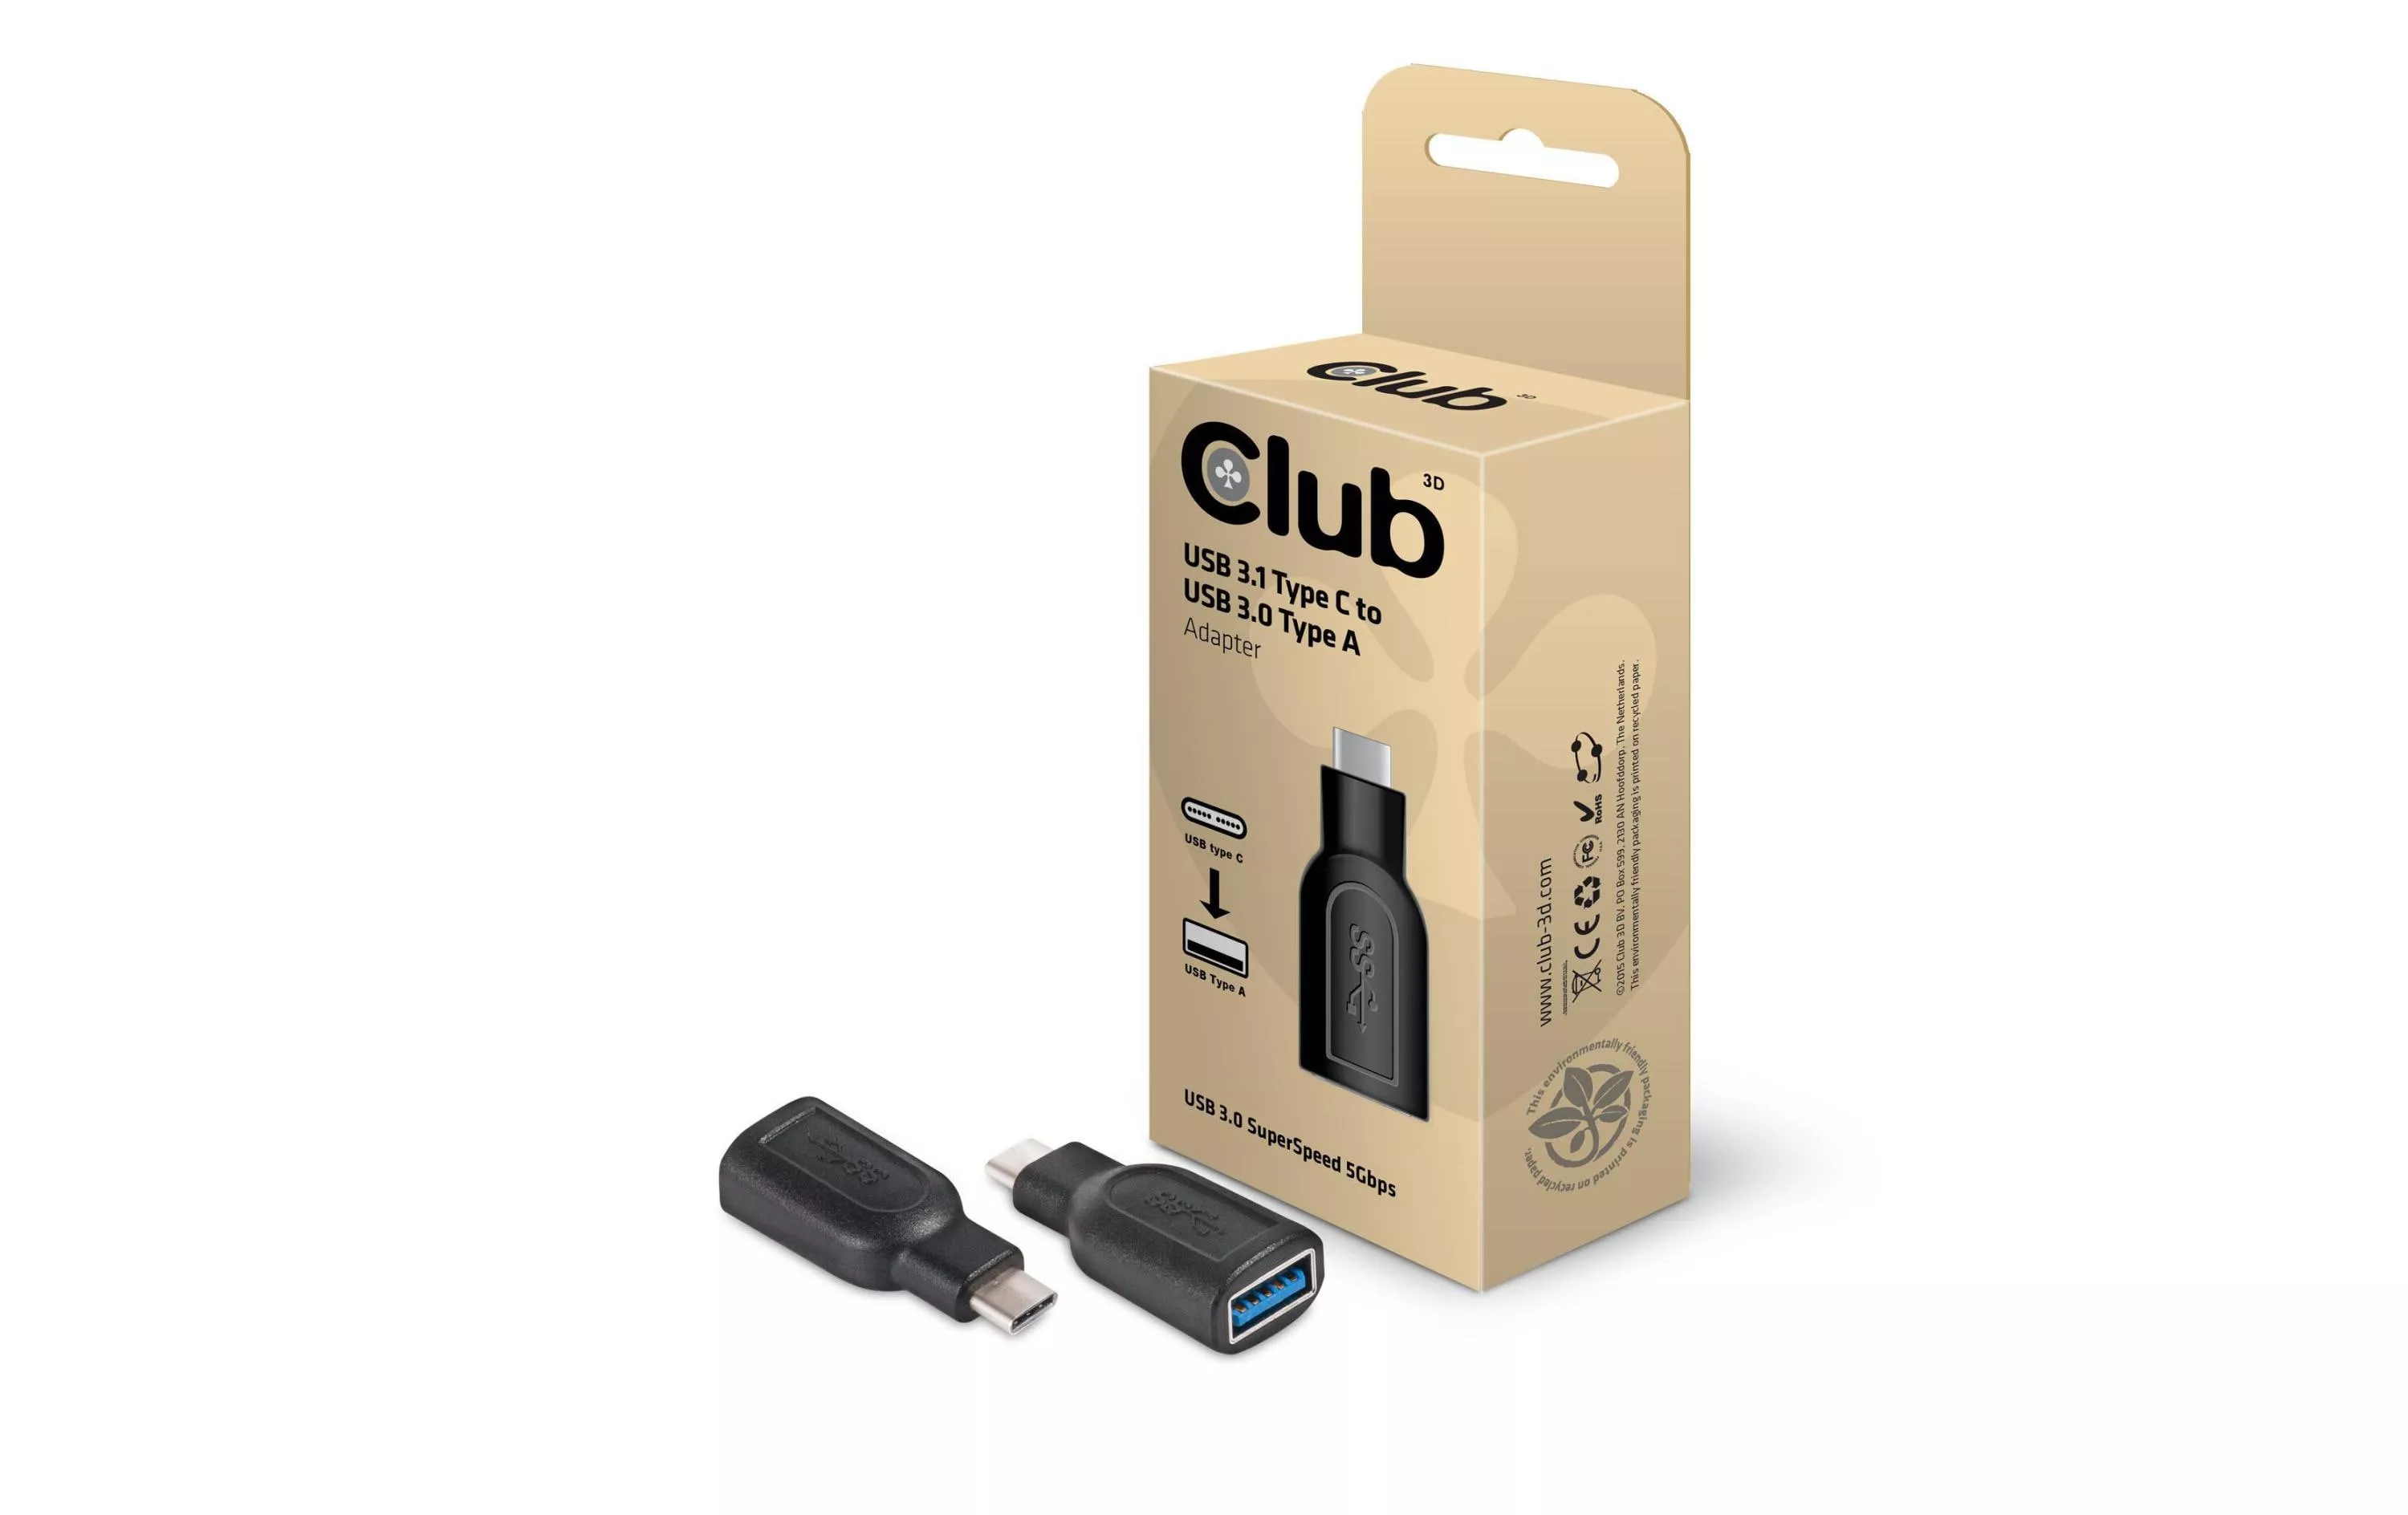 USB 3.0 Adapter CAA-1521 USB-C maschio - USB-A femmina